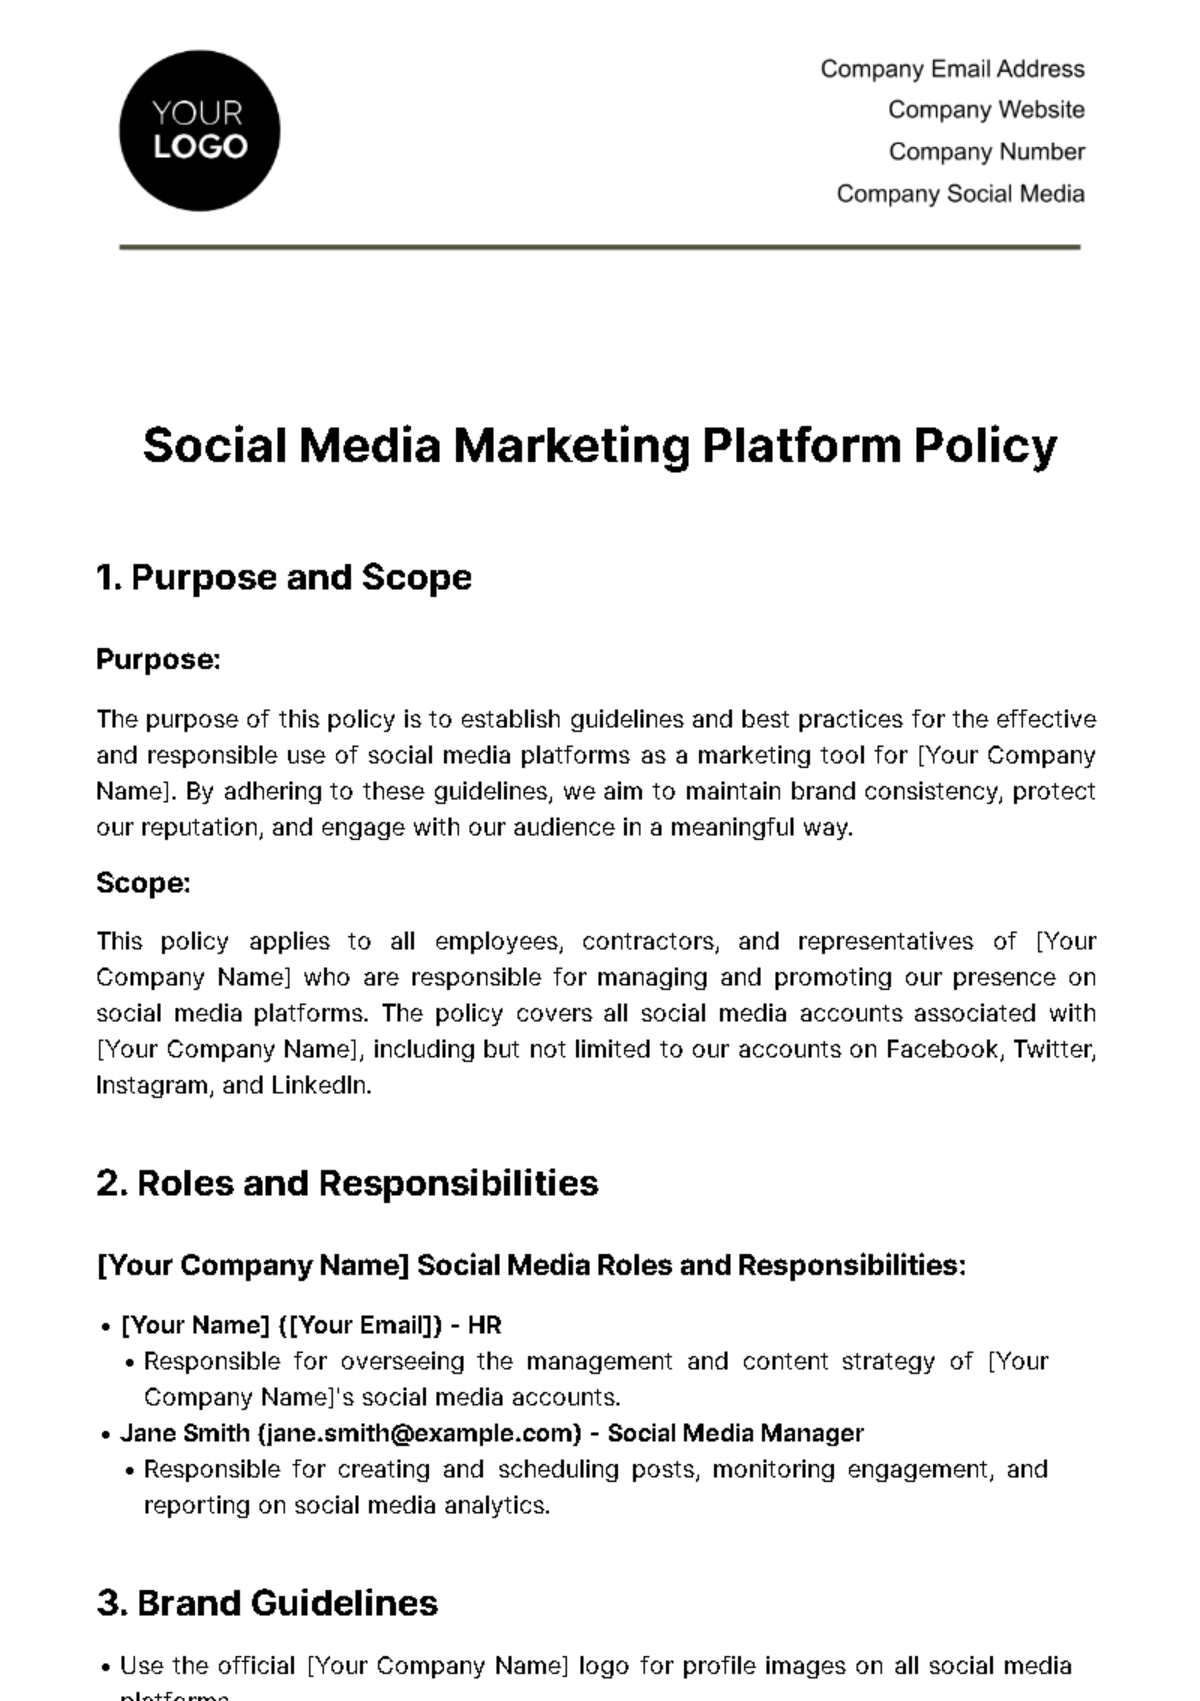 Social Media Marketing Platform Policy Template